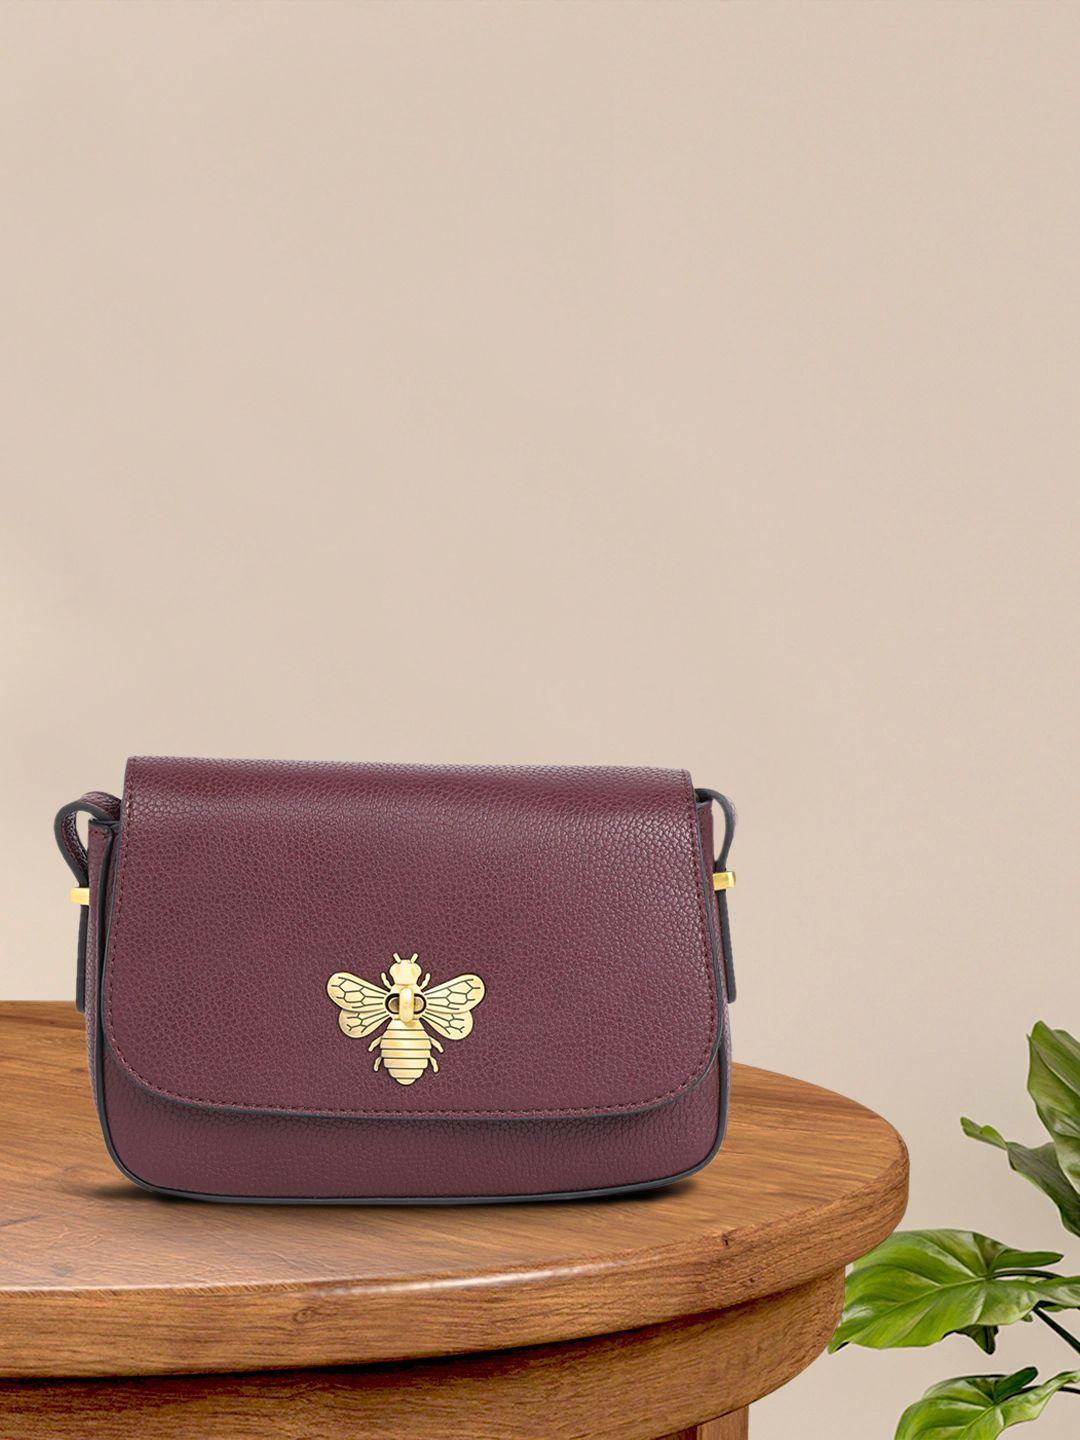 accessorize-burgundy-solid-structured-sling-bag